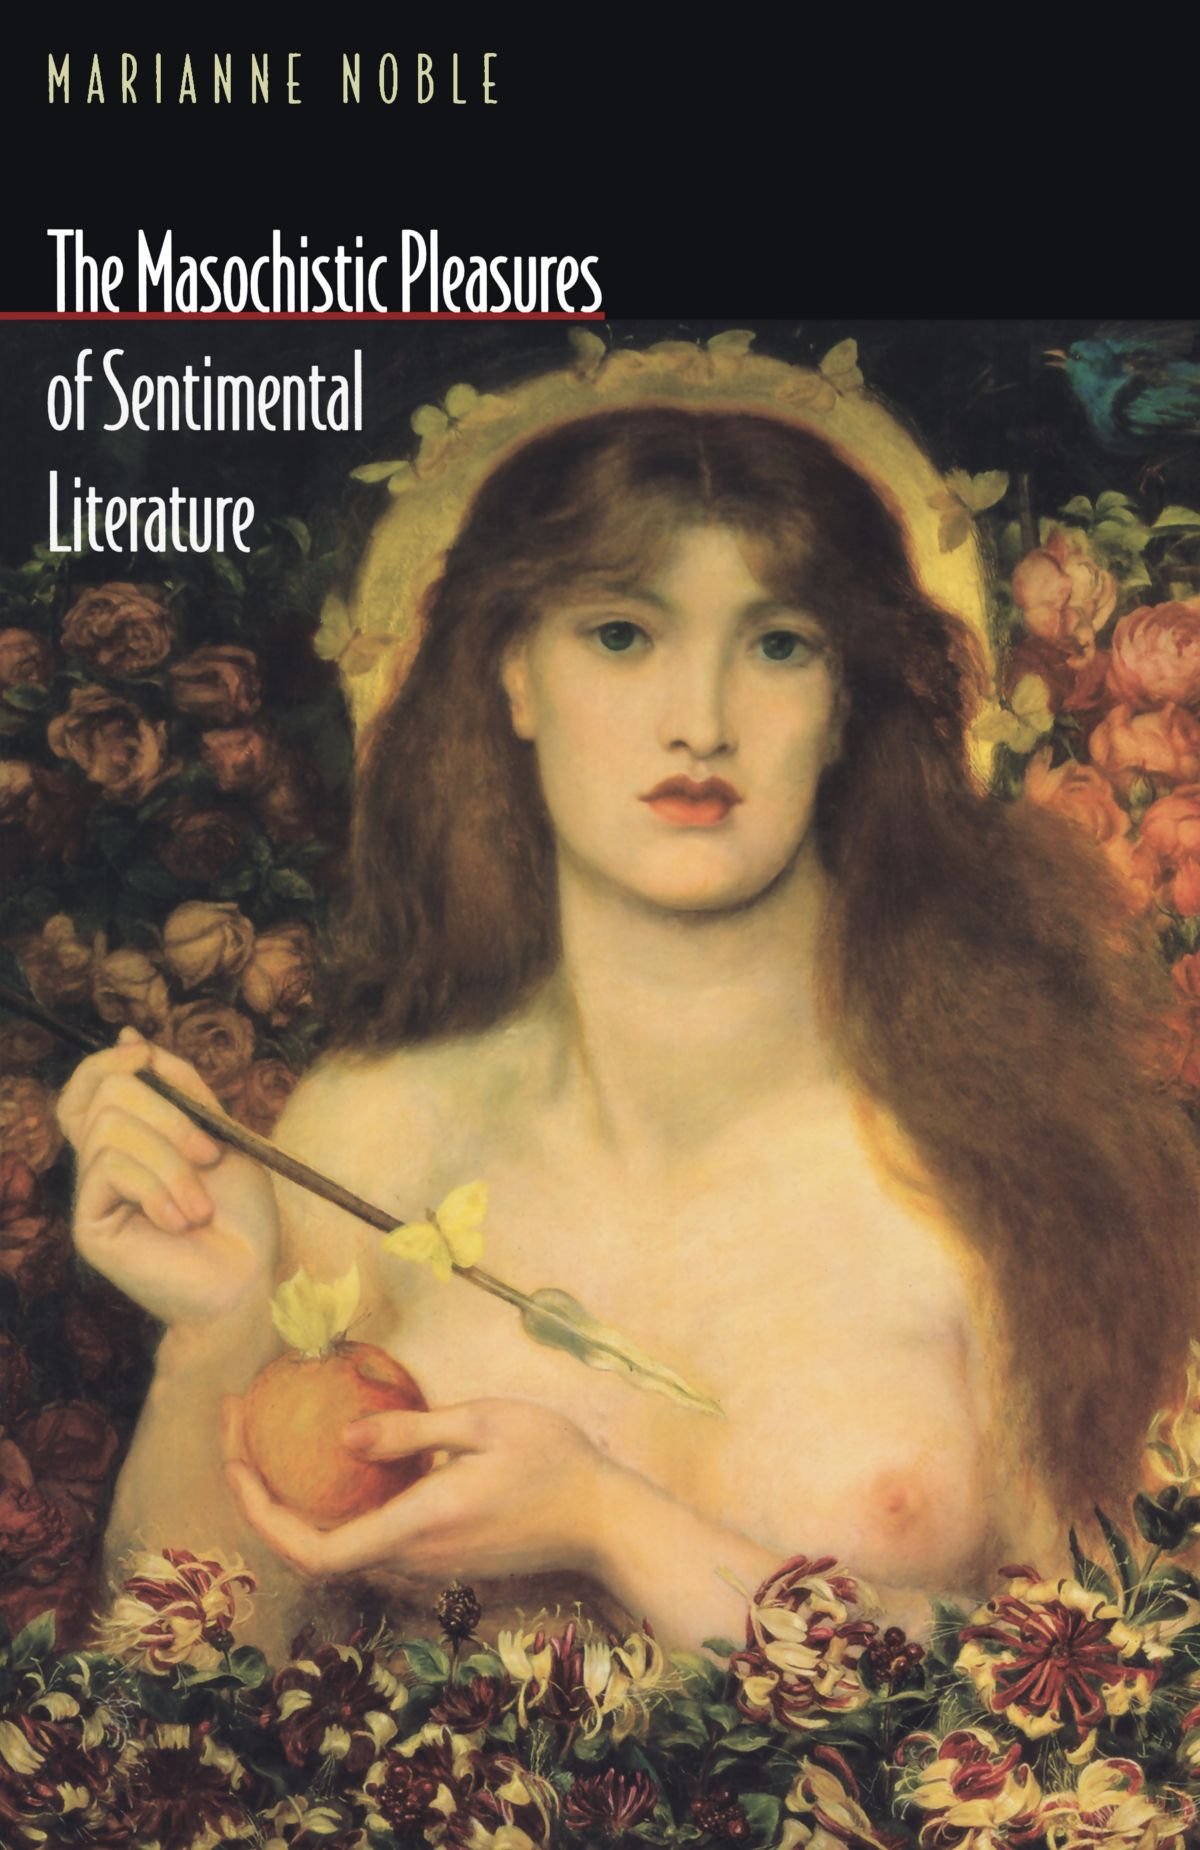 The Masochistic Pleasures of Sentimental Literature